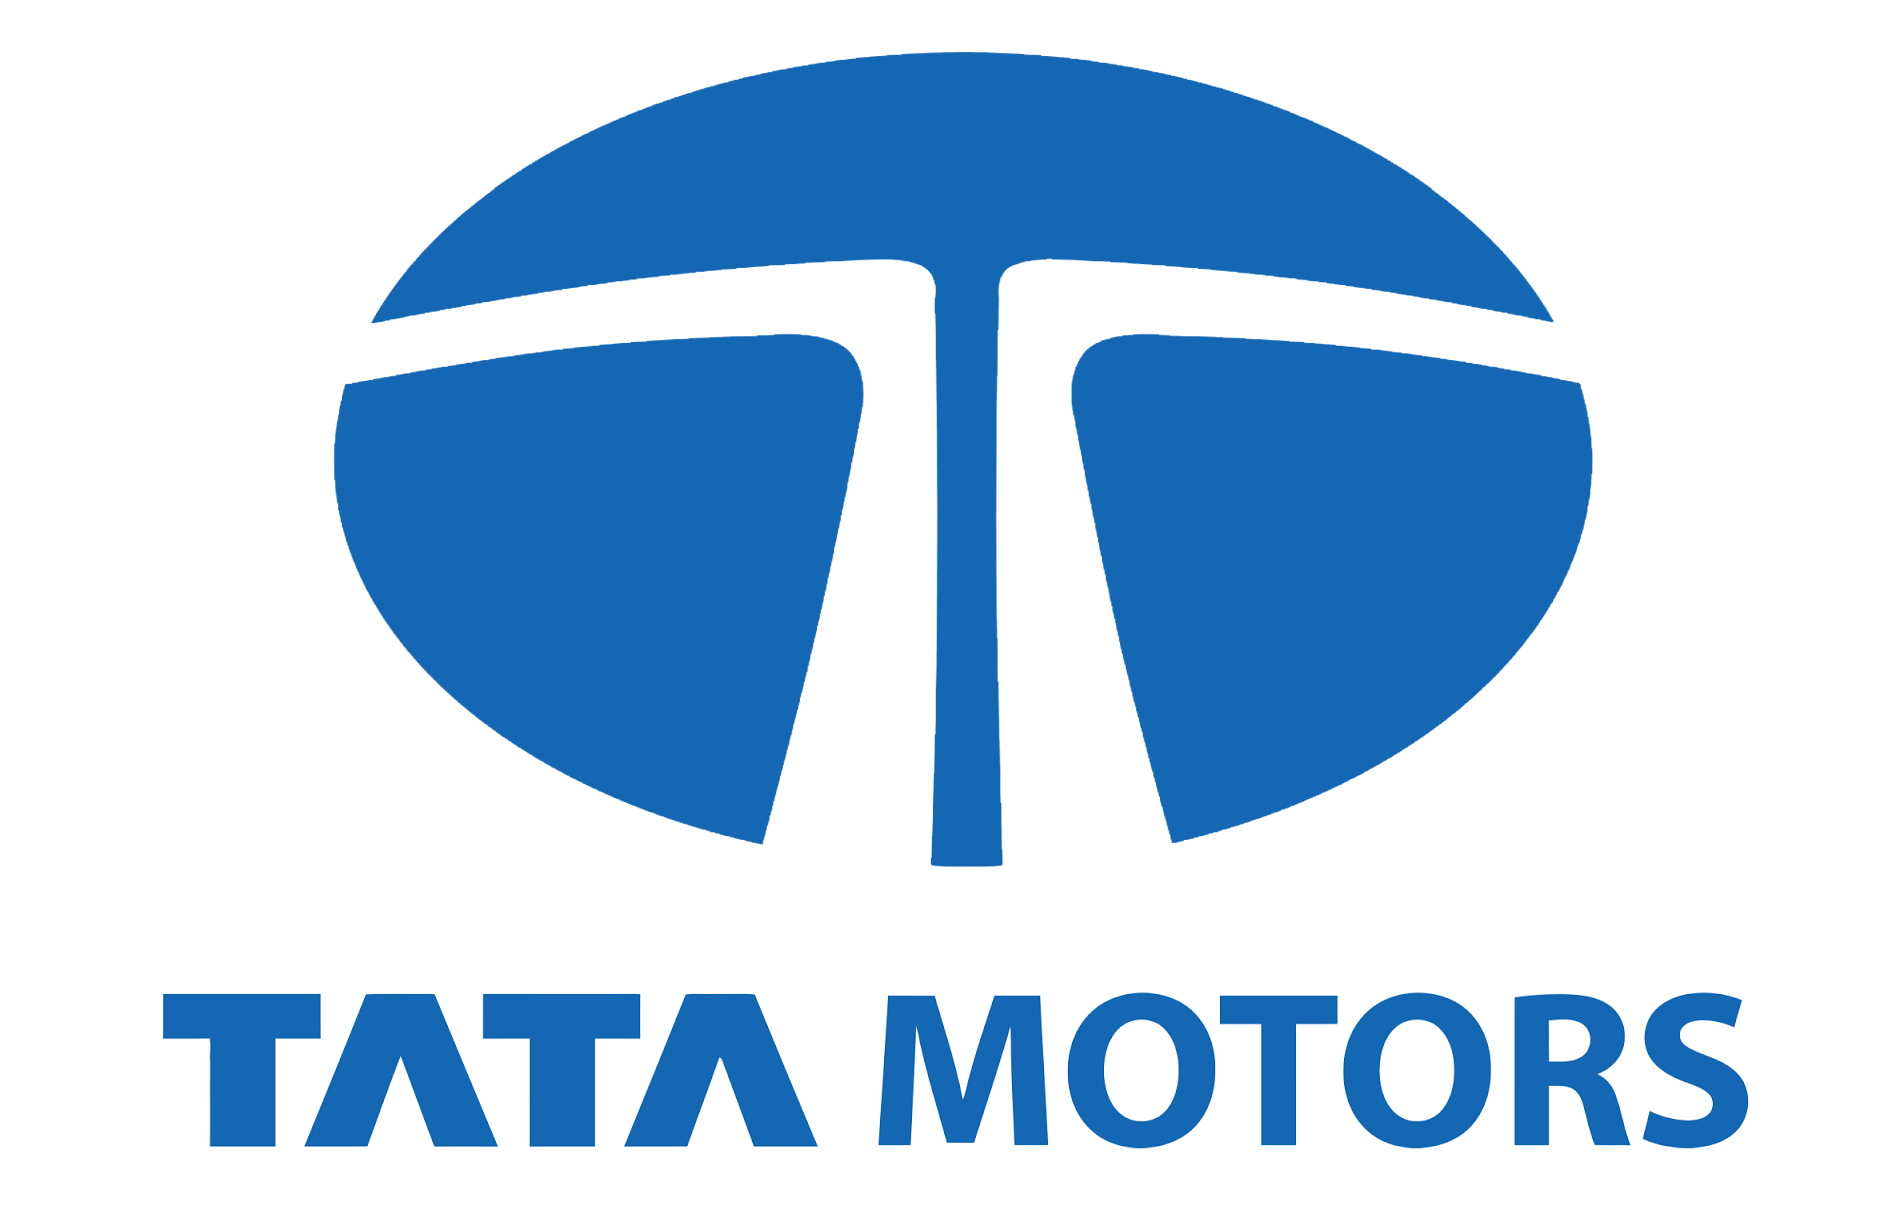 Tata Motors Cars Showroom - Sudarshan Motors|Show Room|Automotive